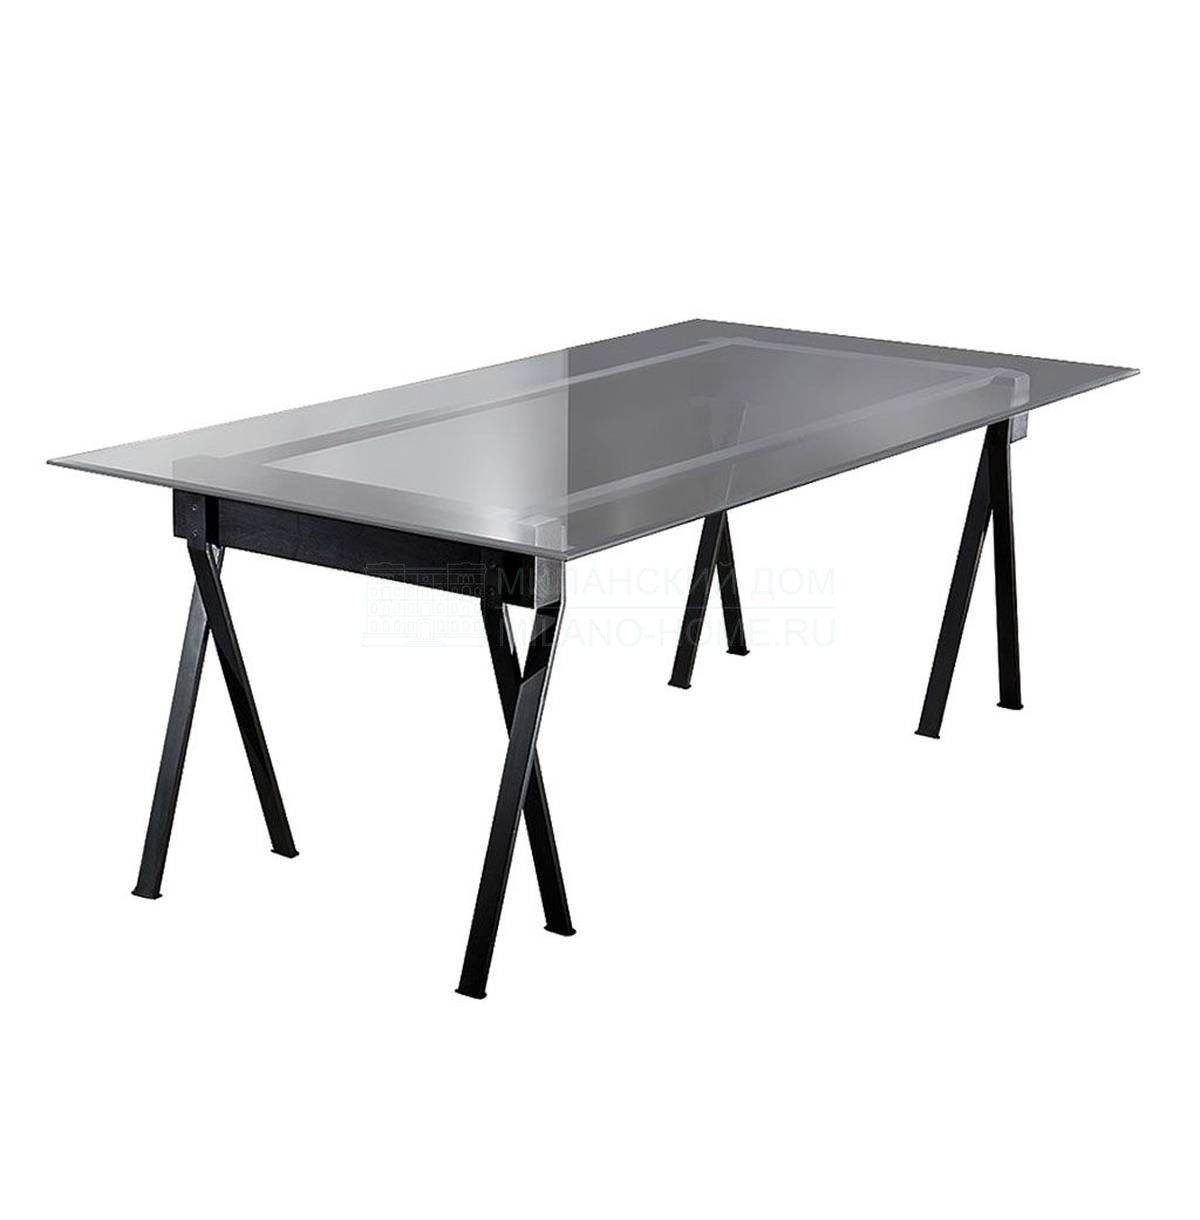 Обеденный стол BH-164 dining table из Испании фабрики GUADARTE